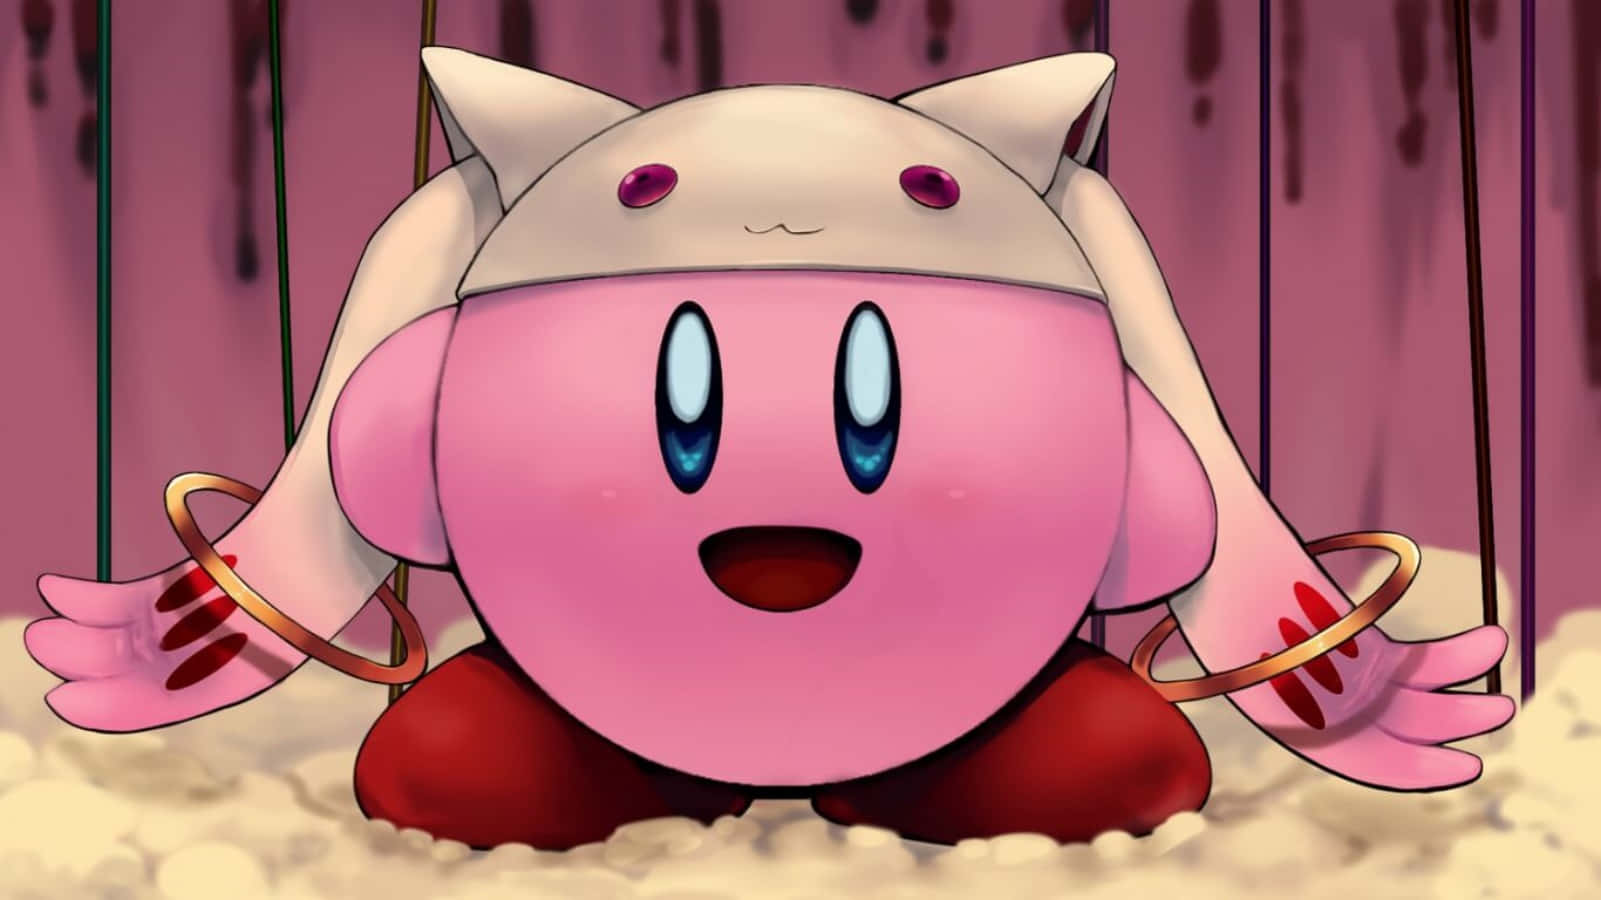 "Kirby Soars Through a Beautiful Night Landscape"